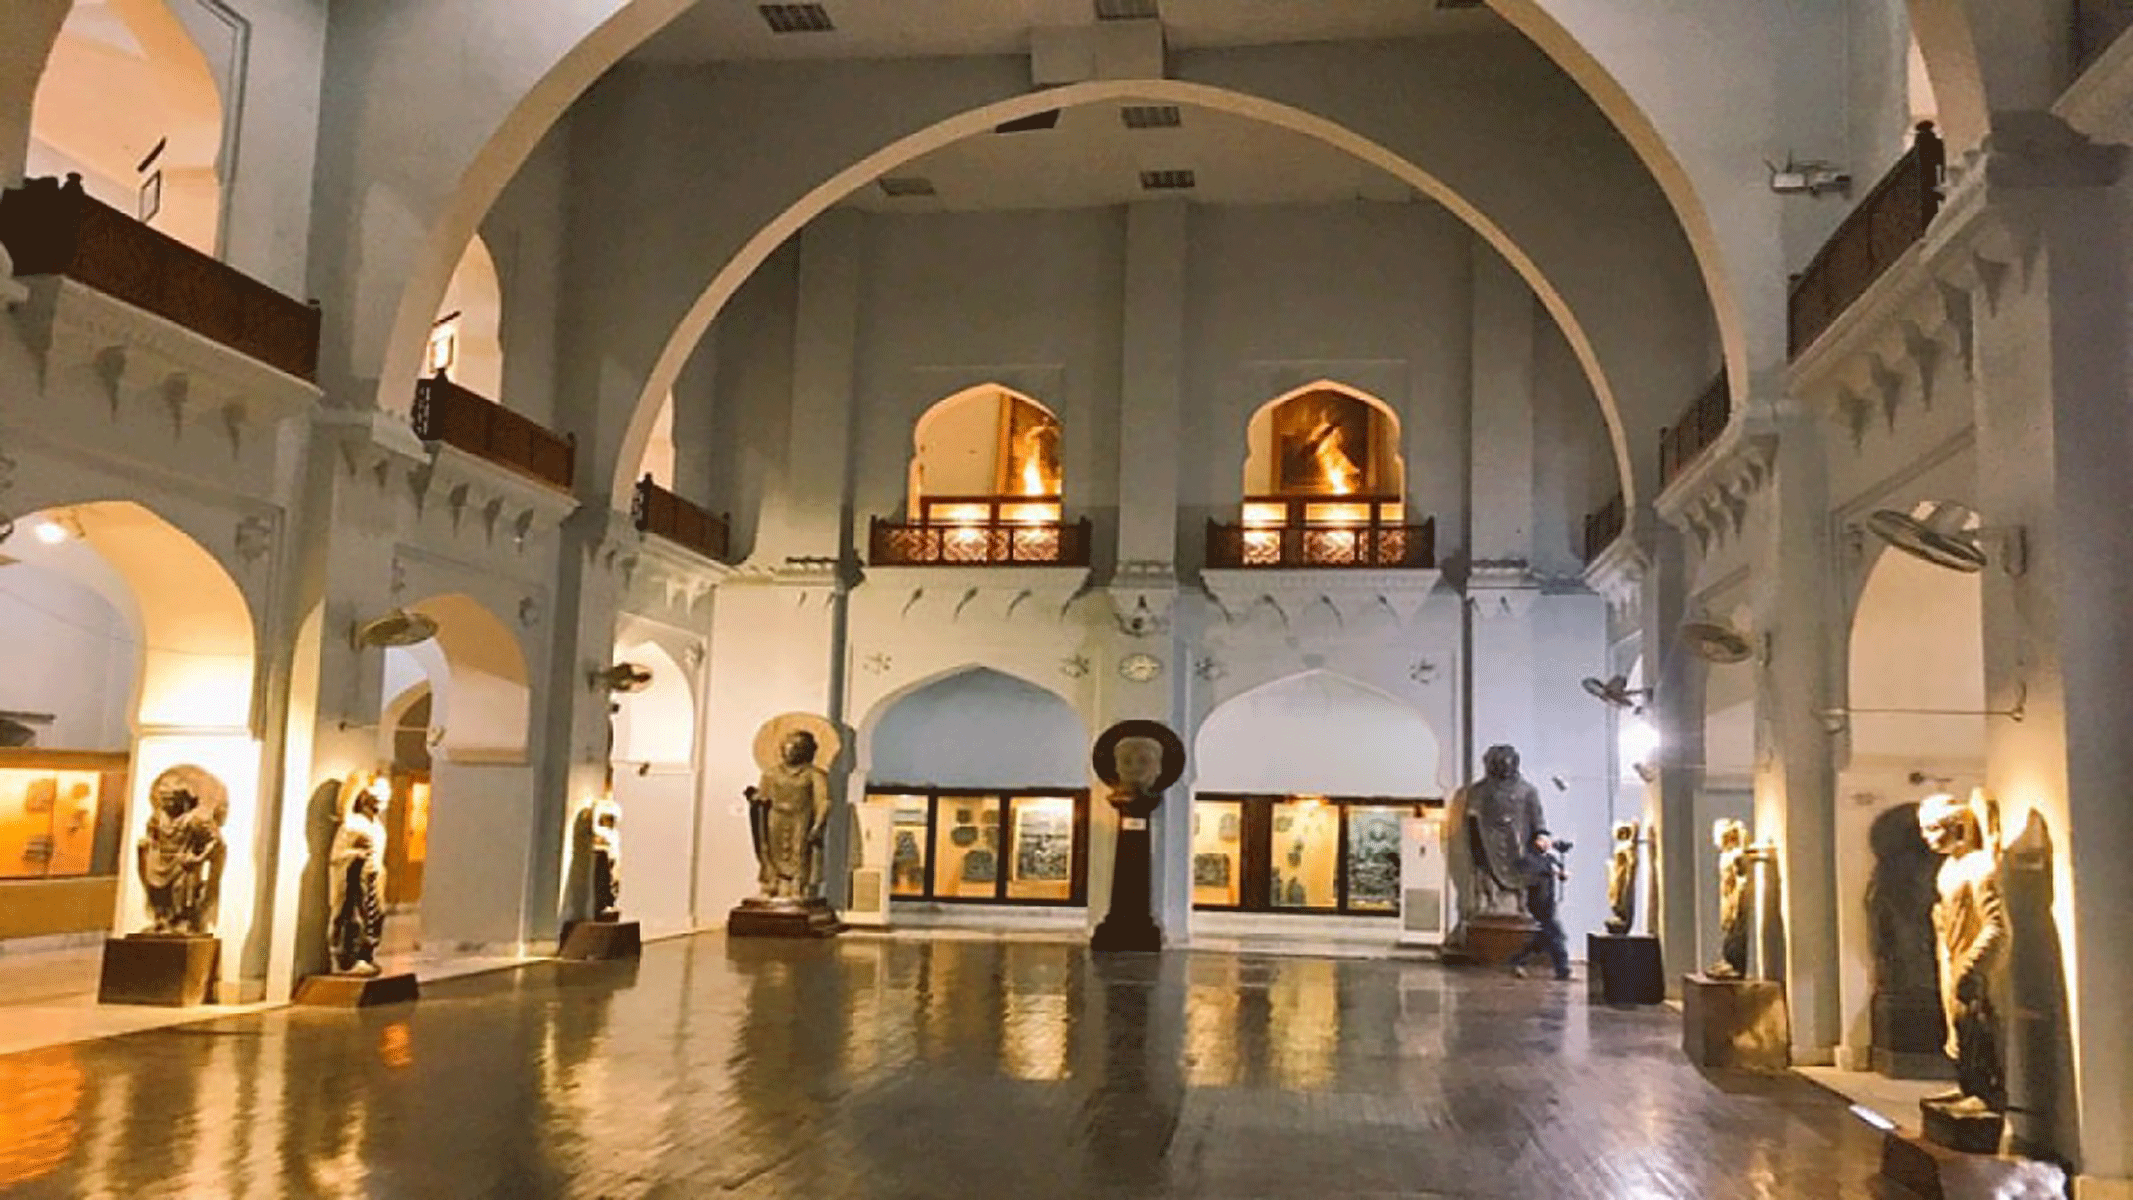 Peshawar Museum Interior Existing View, Pakistan